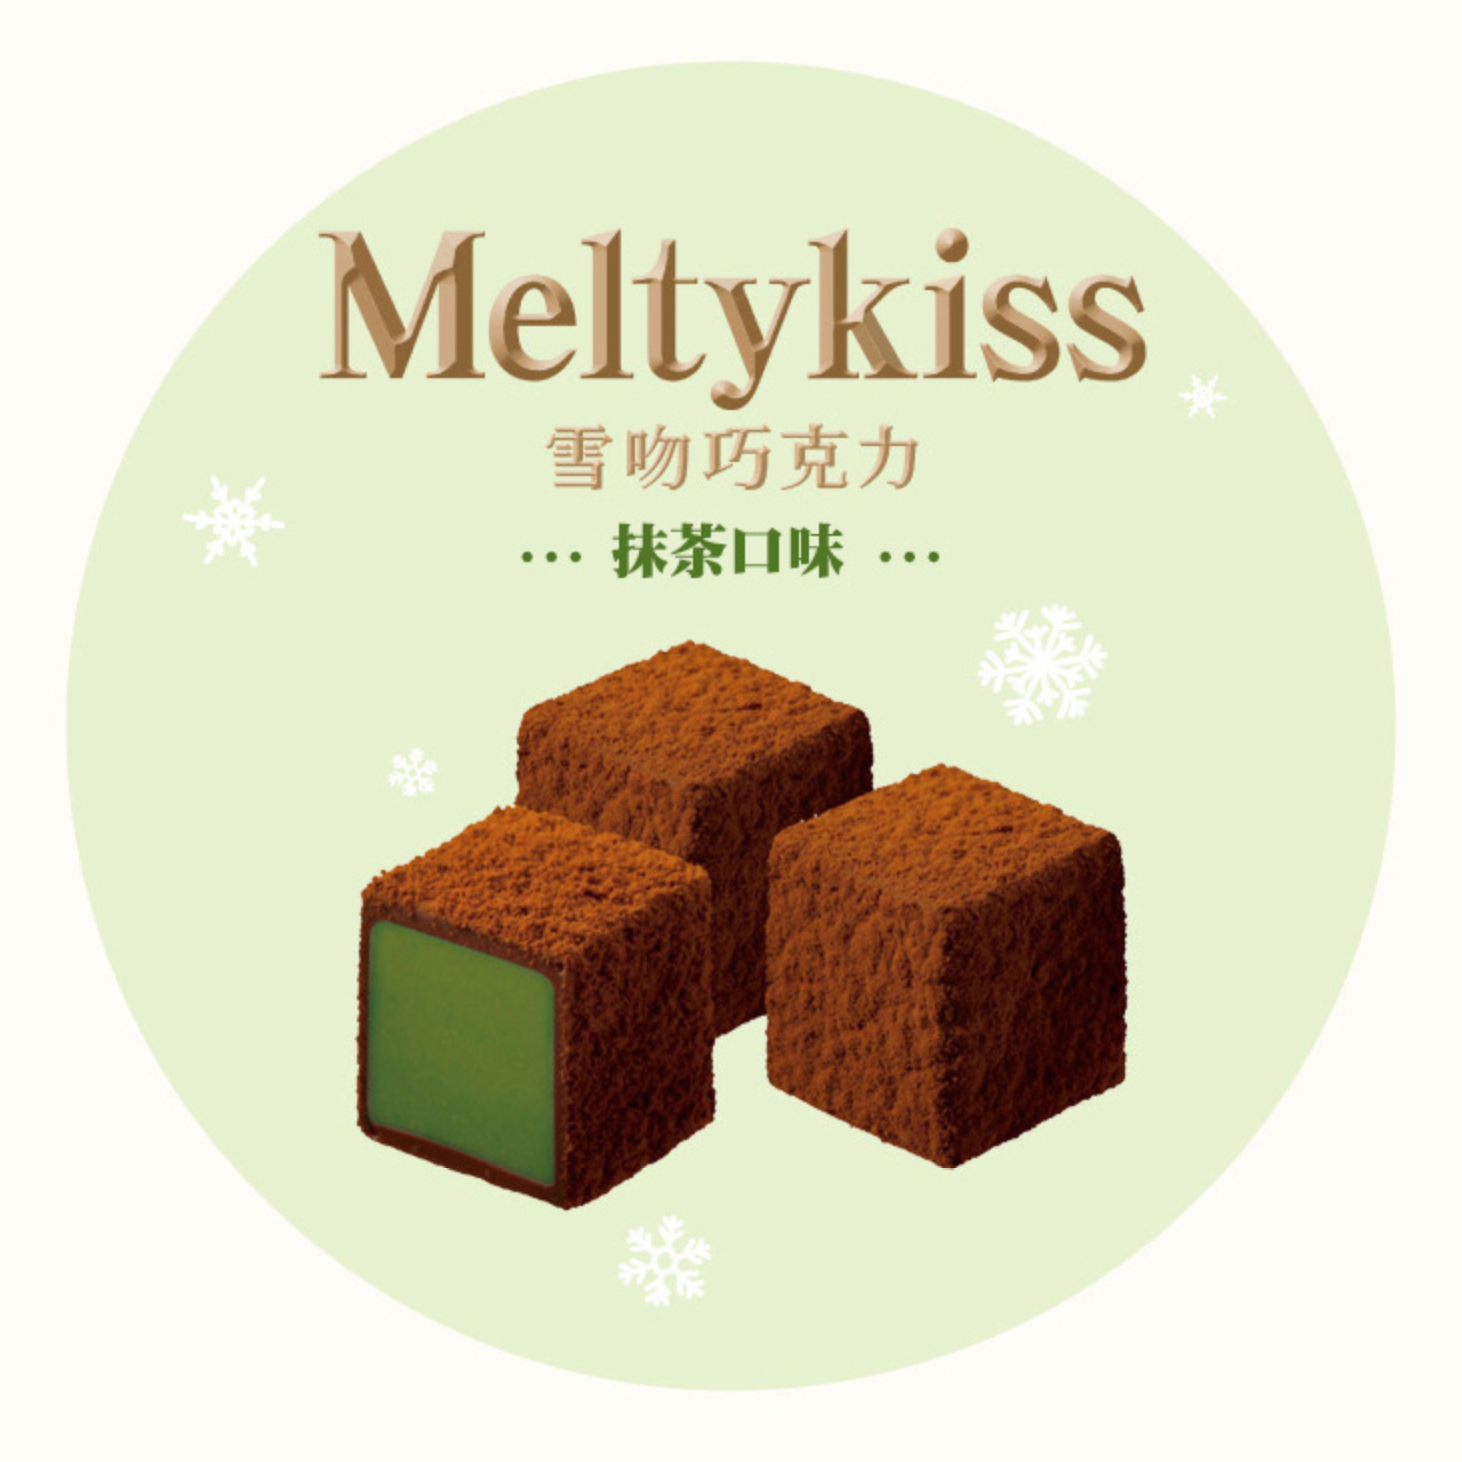 明治雪吻巧克力-抹茶 (60g)/ meiji melty kiss matcha